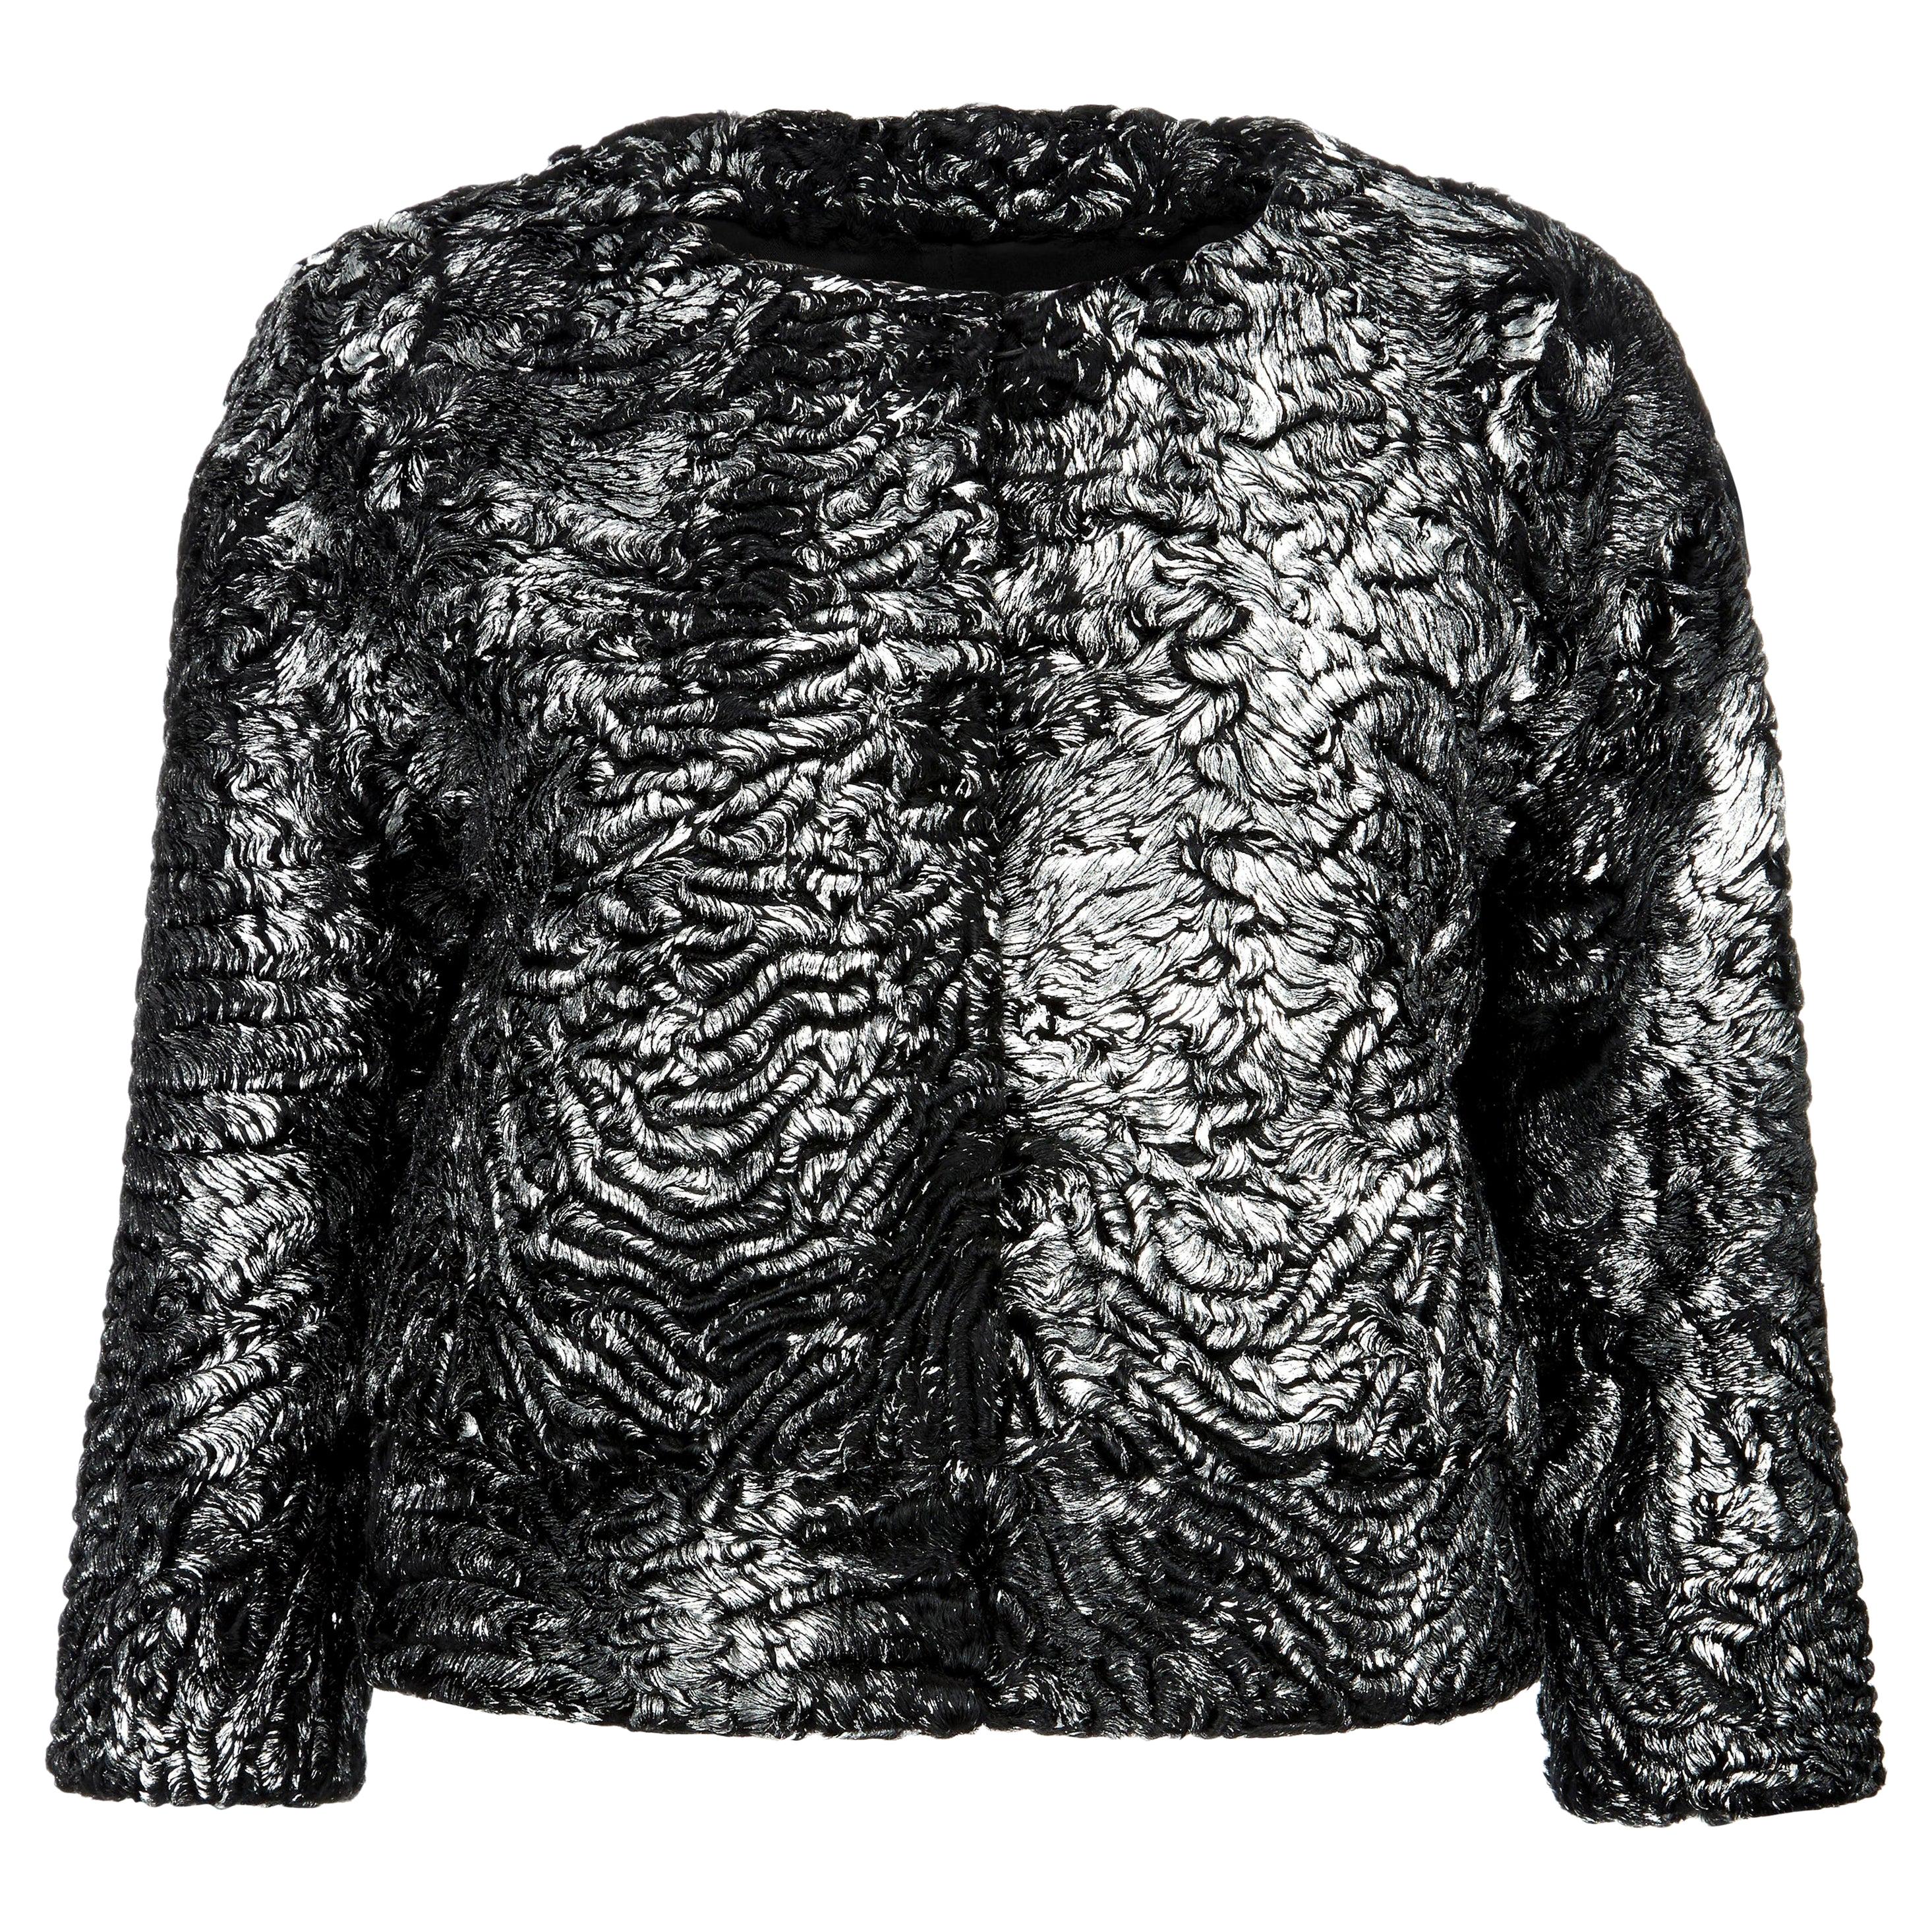 Verheyen London Cropped Jacket in Swakara Lamb Fur in Metallic Silver - Size 8 